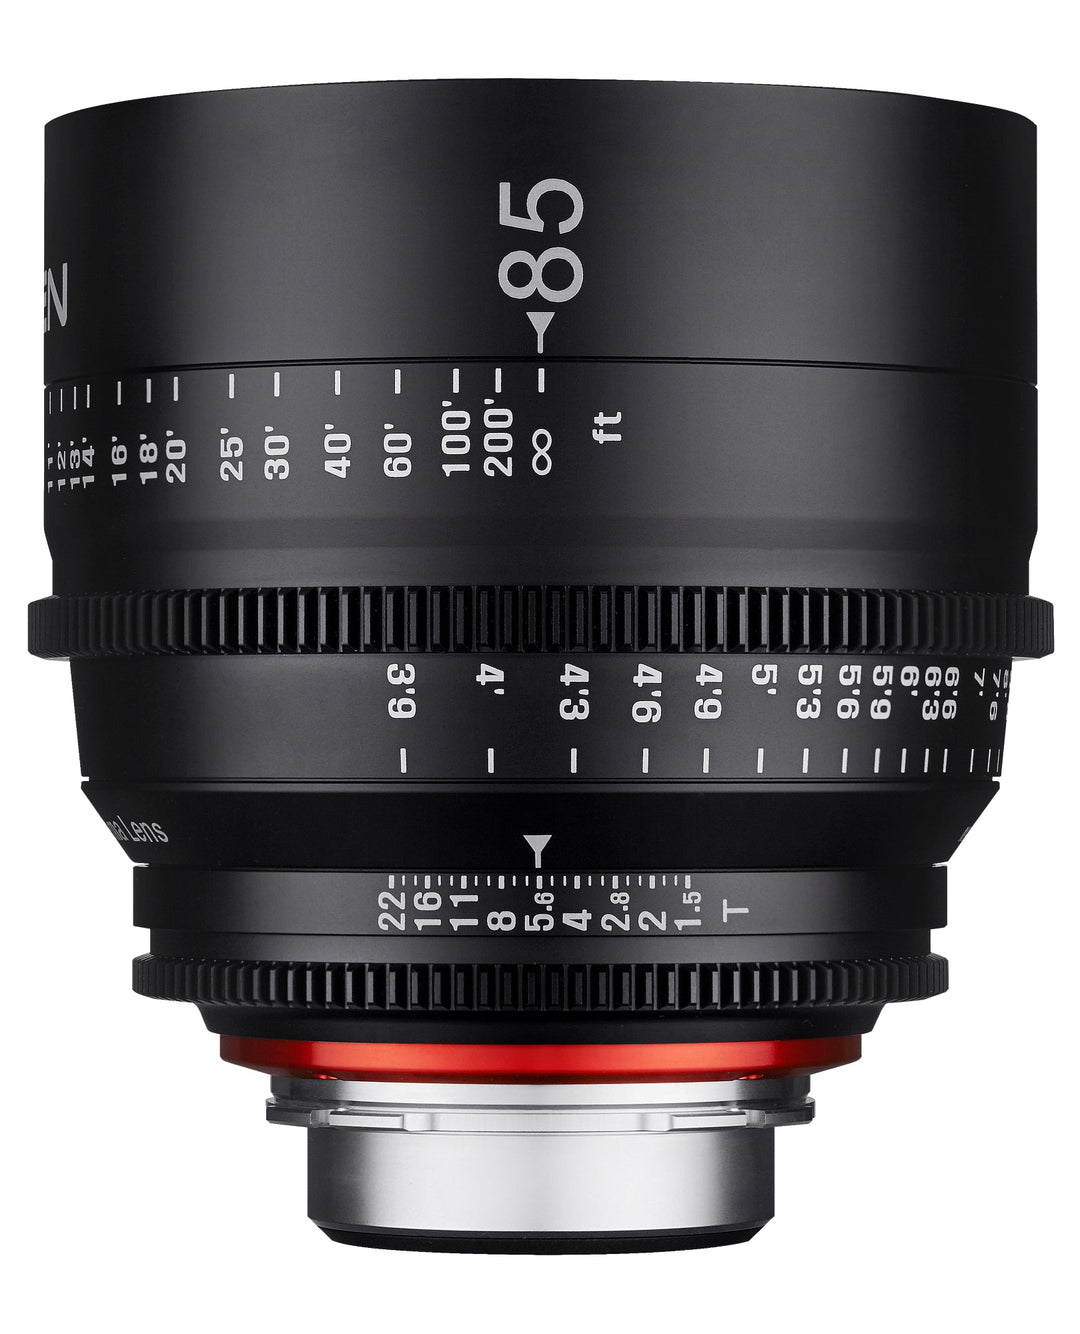 24, 50, 85mm T1.5 XEEN Pro Cinema Lens Bundle - Rokinon